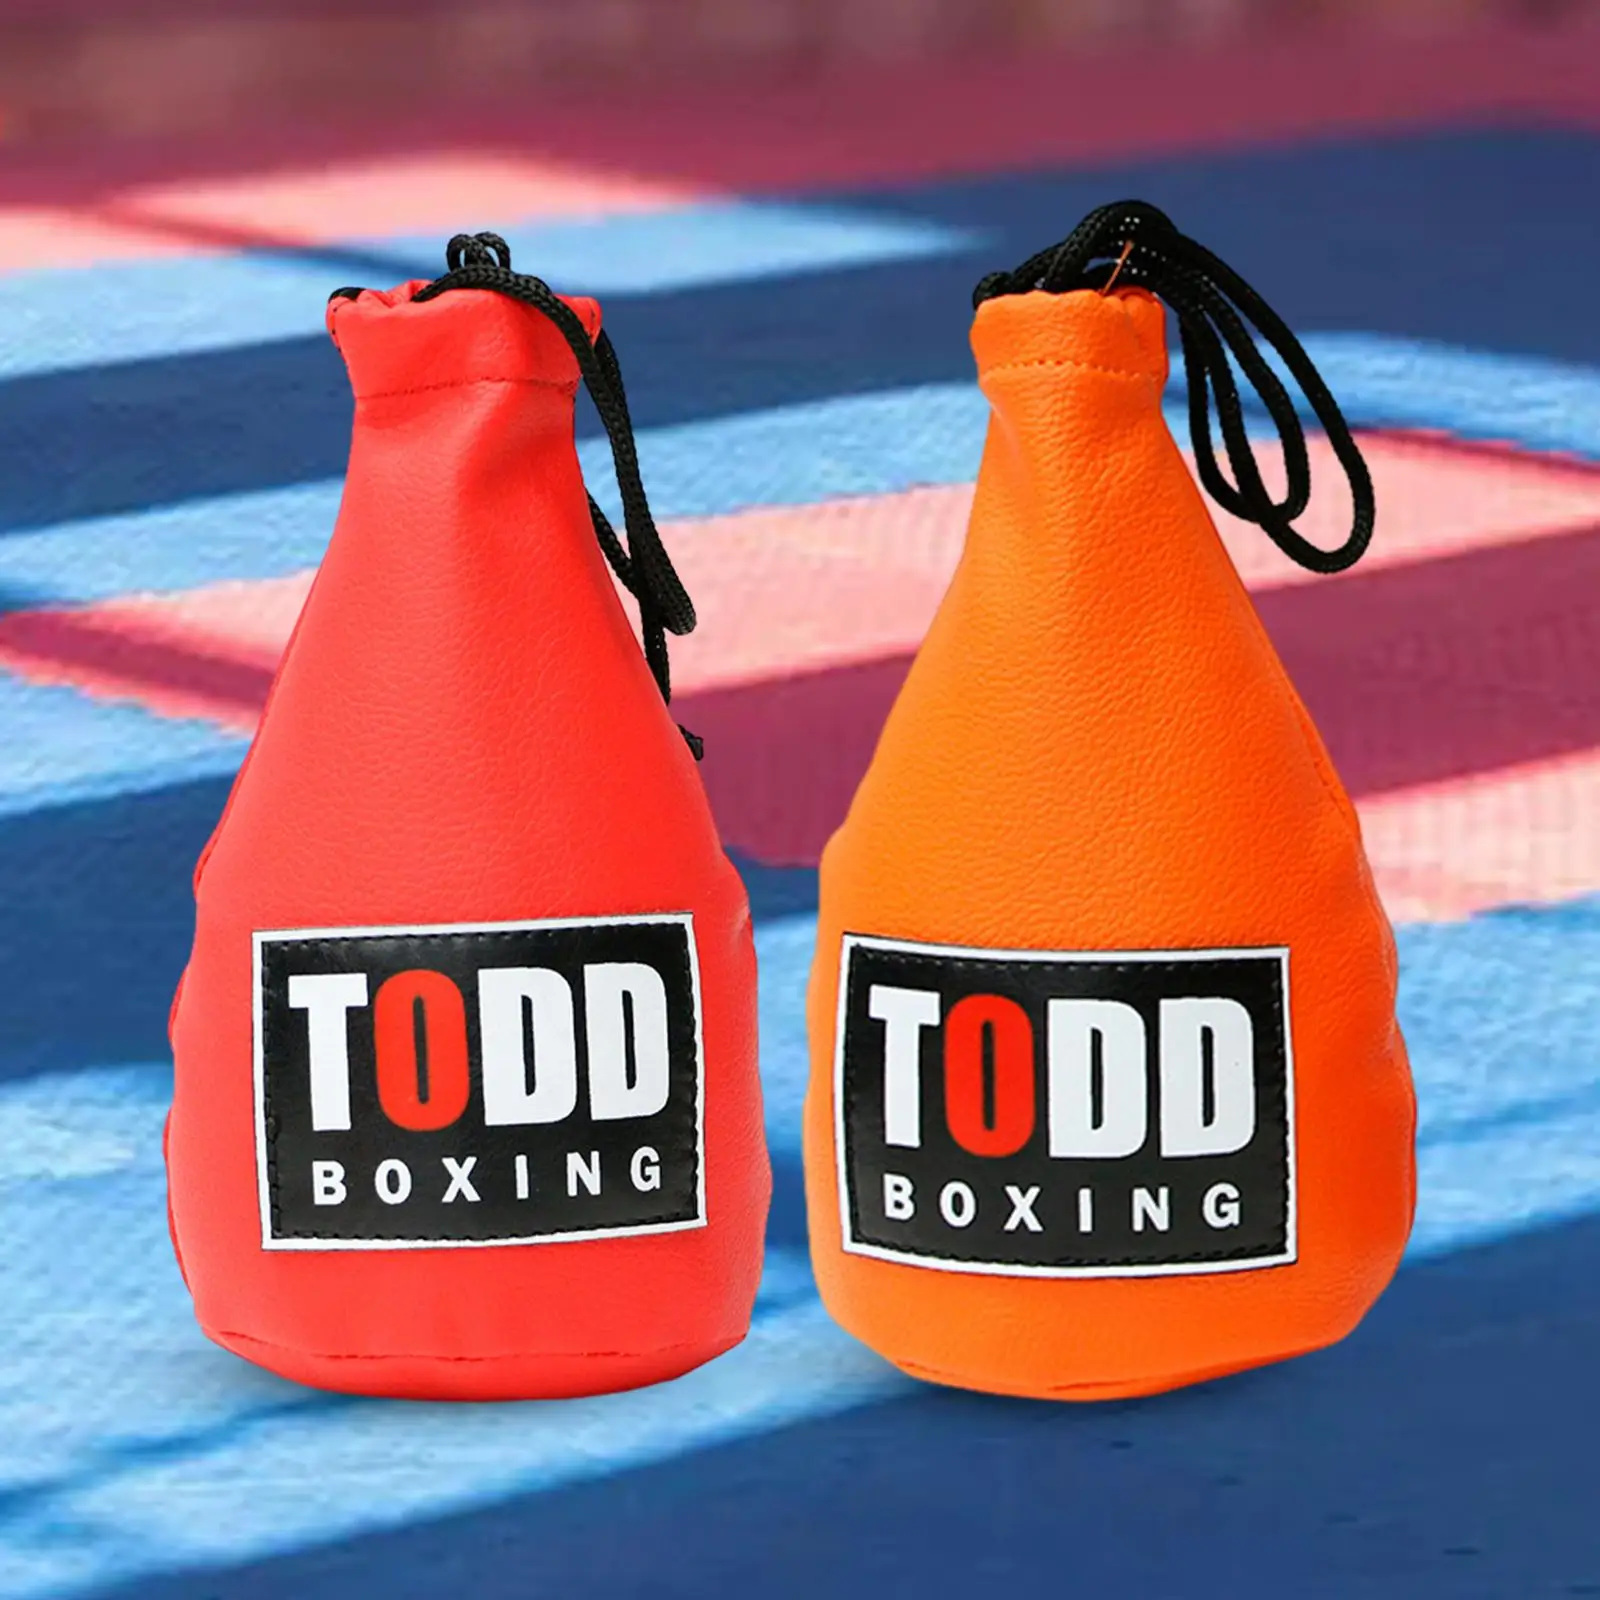 Dodge Reaction Bag Mma Pendulum Training Boxing Dodge Training Bag for Punching Speed Agility Fight Skill Kickboxing Workout